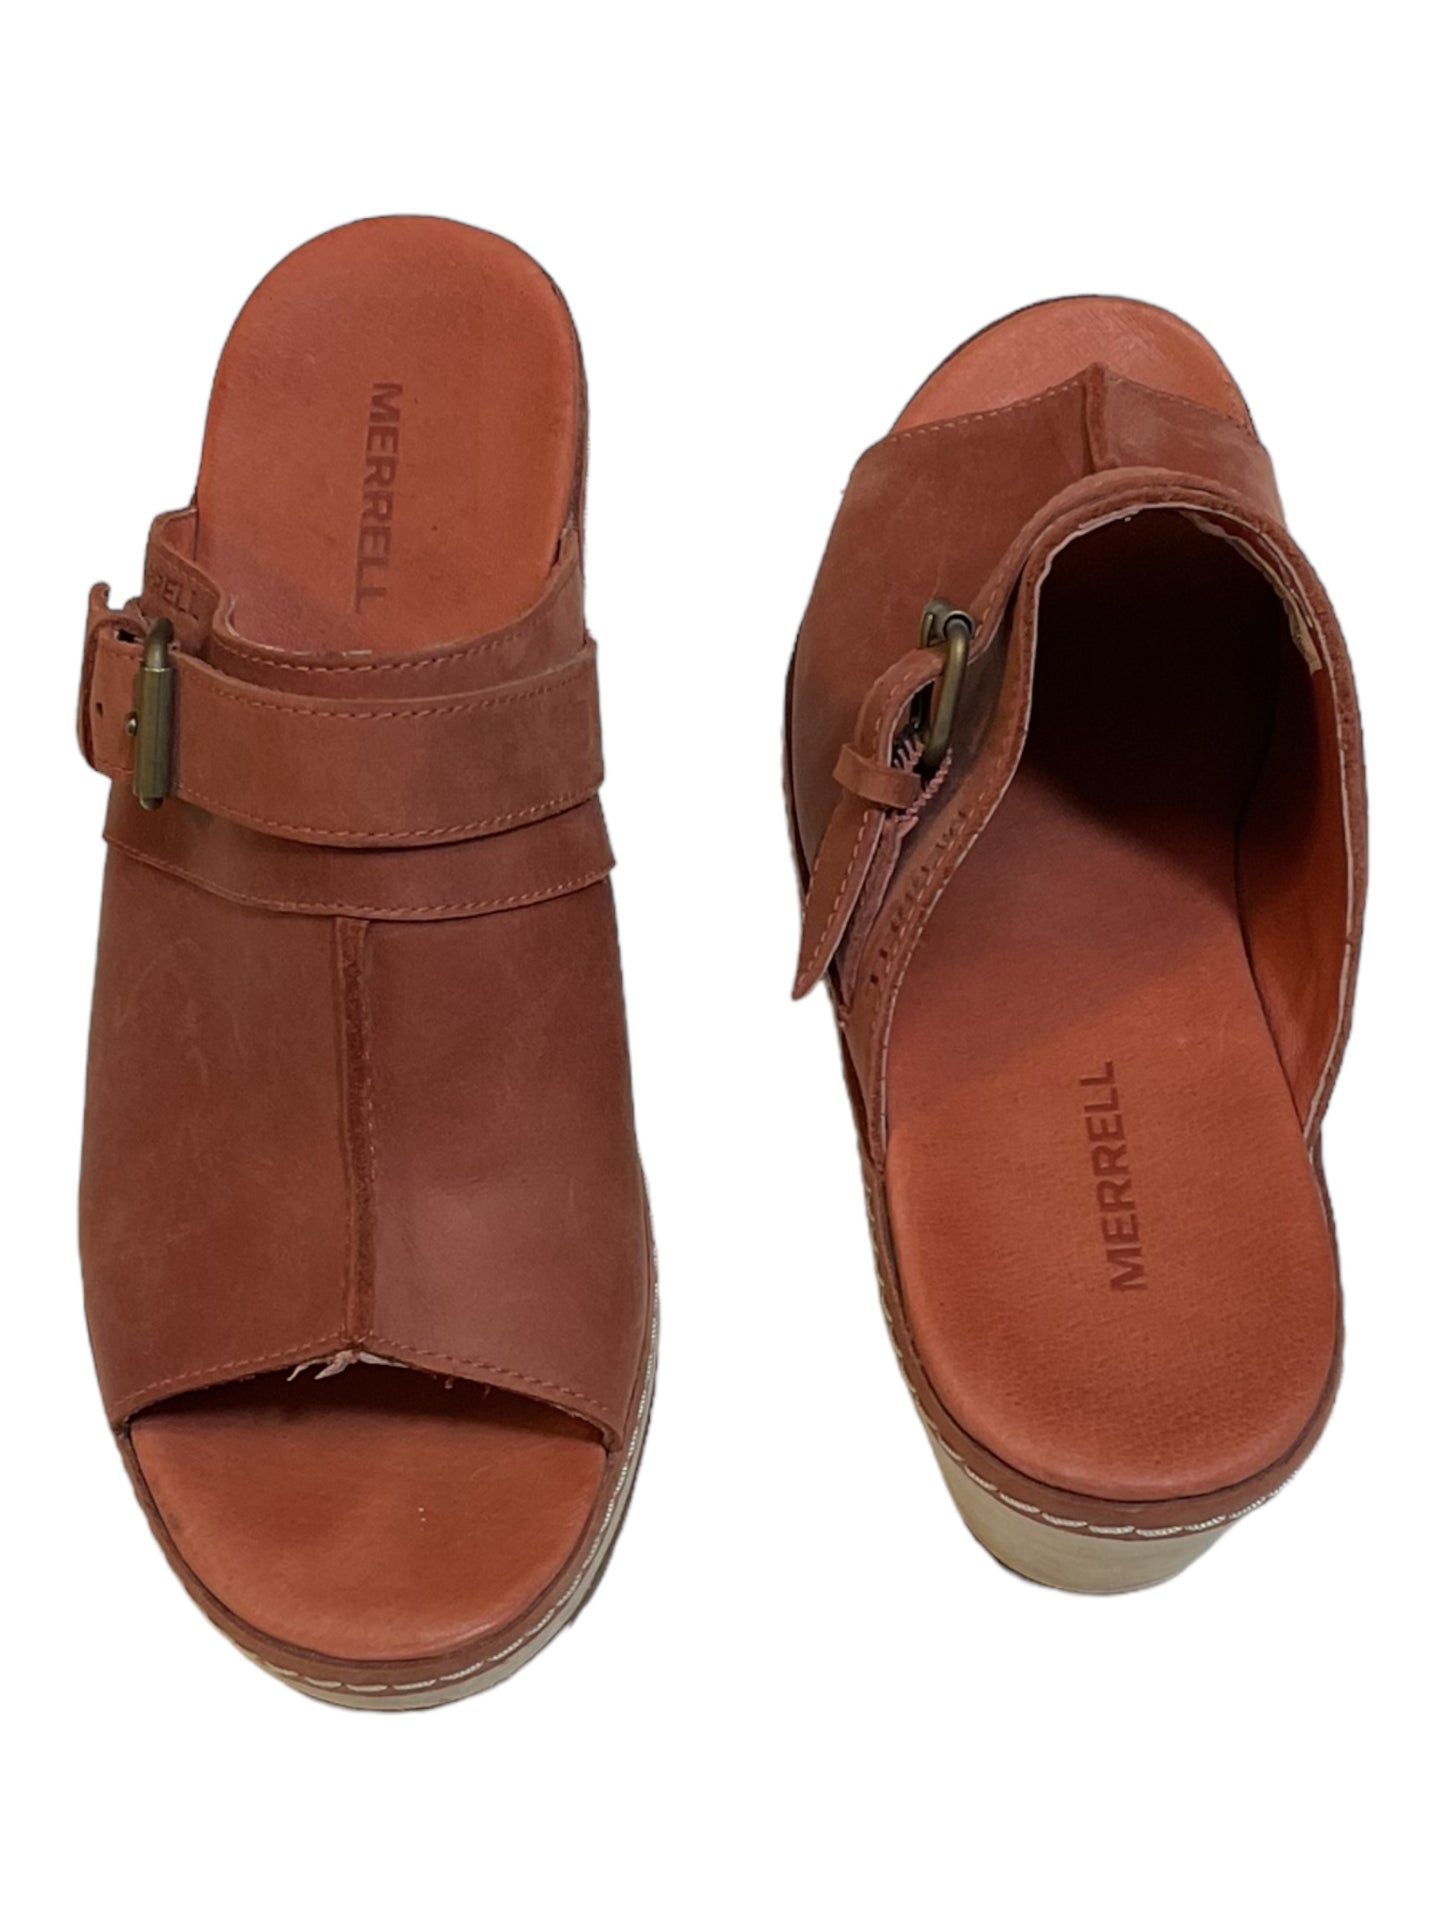 Sandals Heels Block By Merrell  Size: 7.5